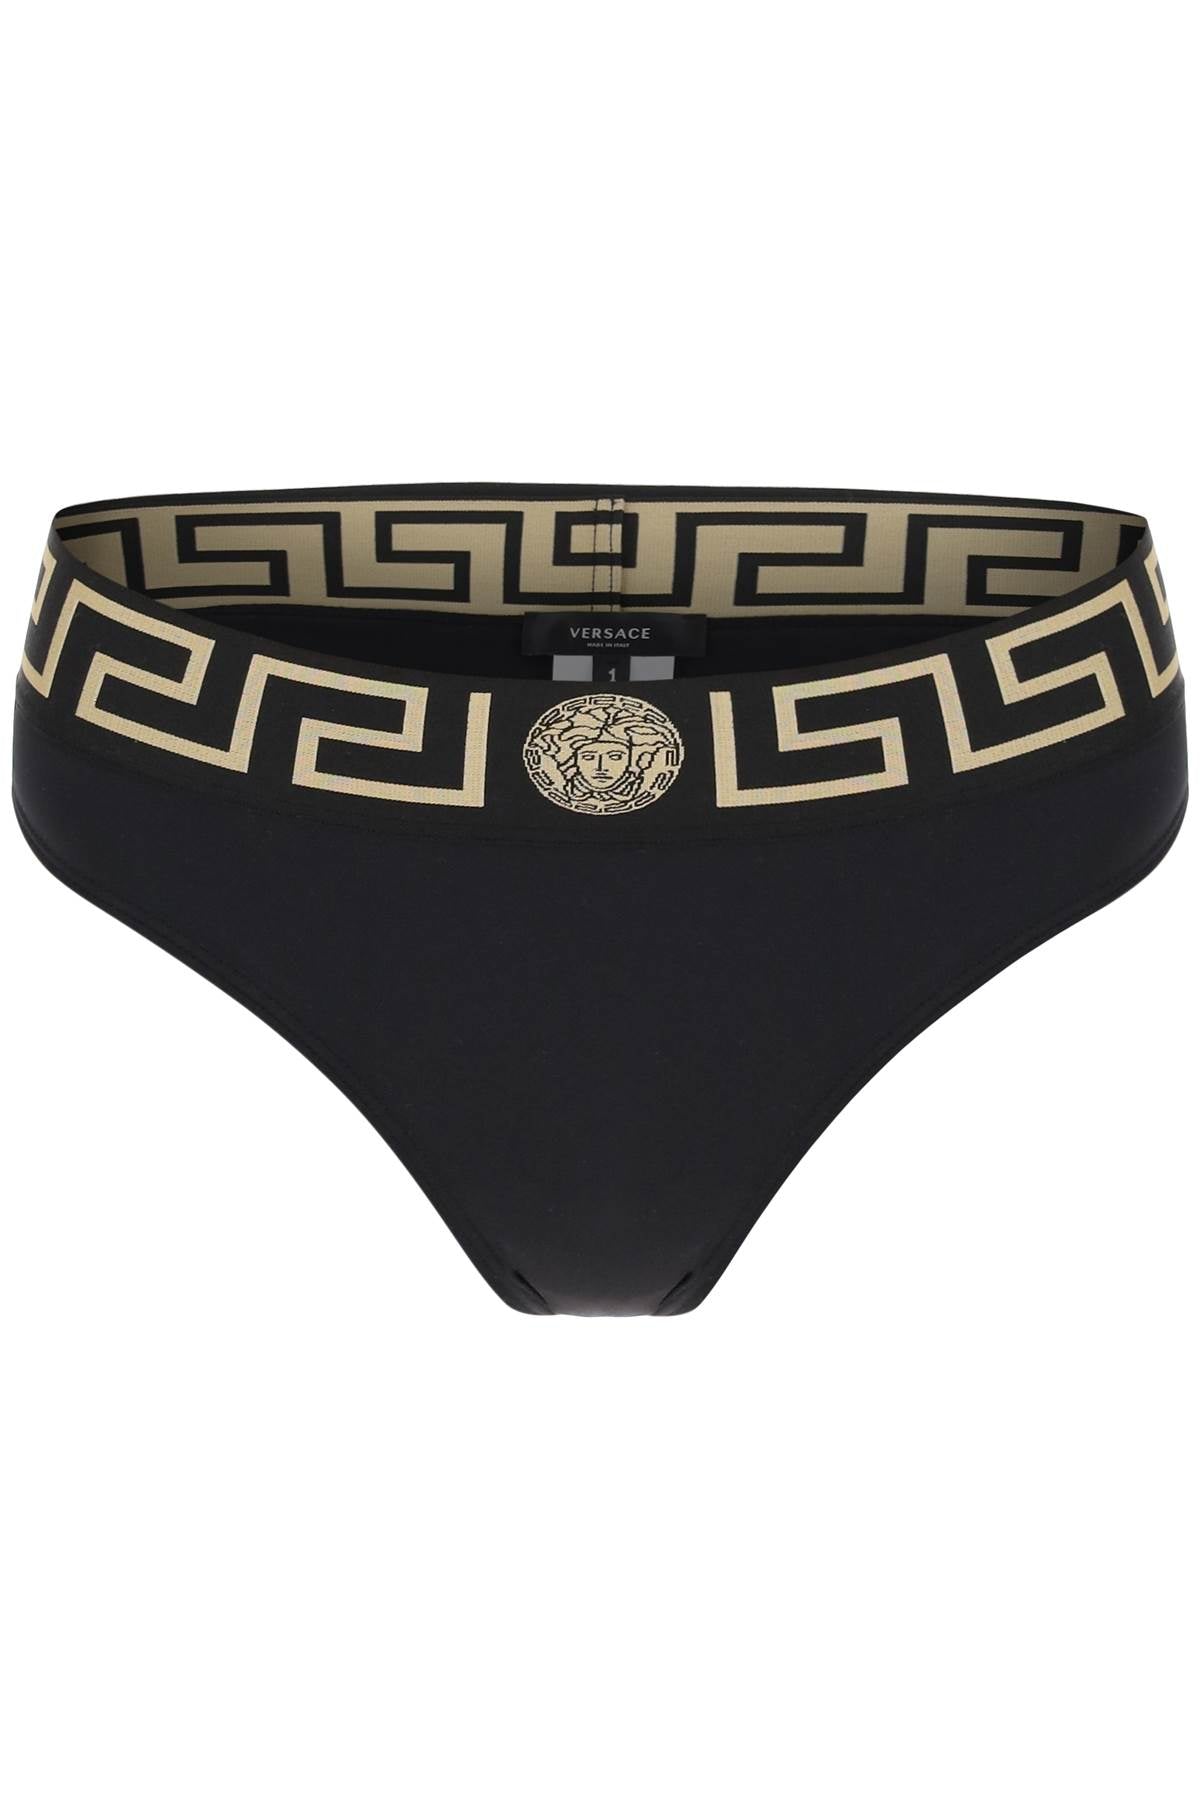 Versace bikini bottom with greca band-0